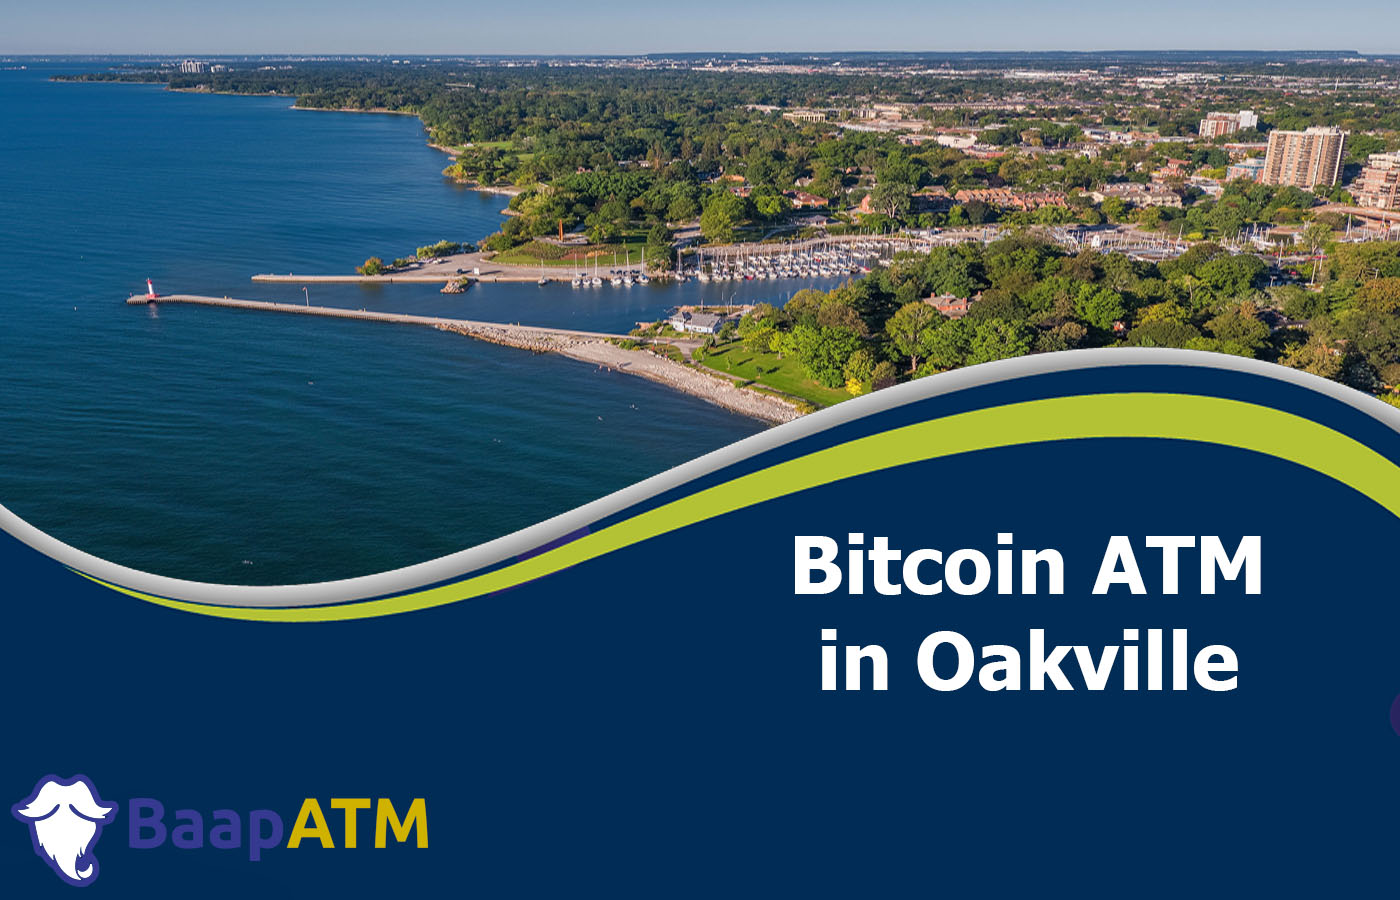 But bitcoin in Oakville